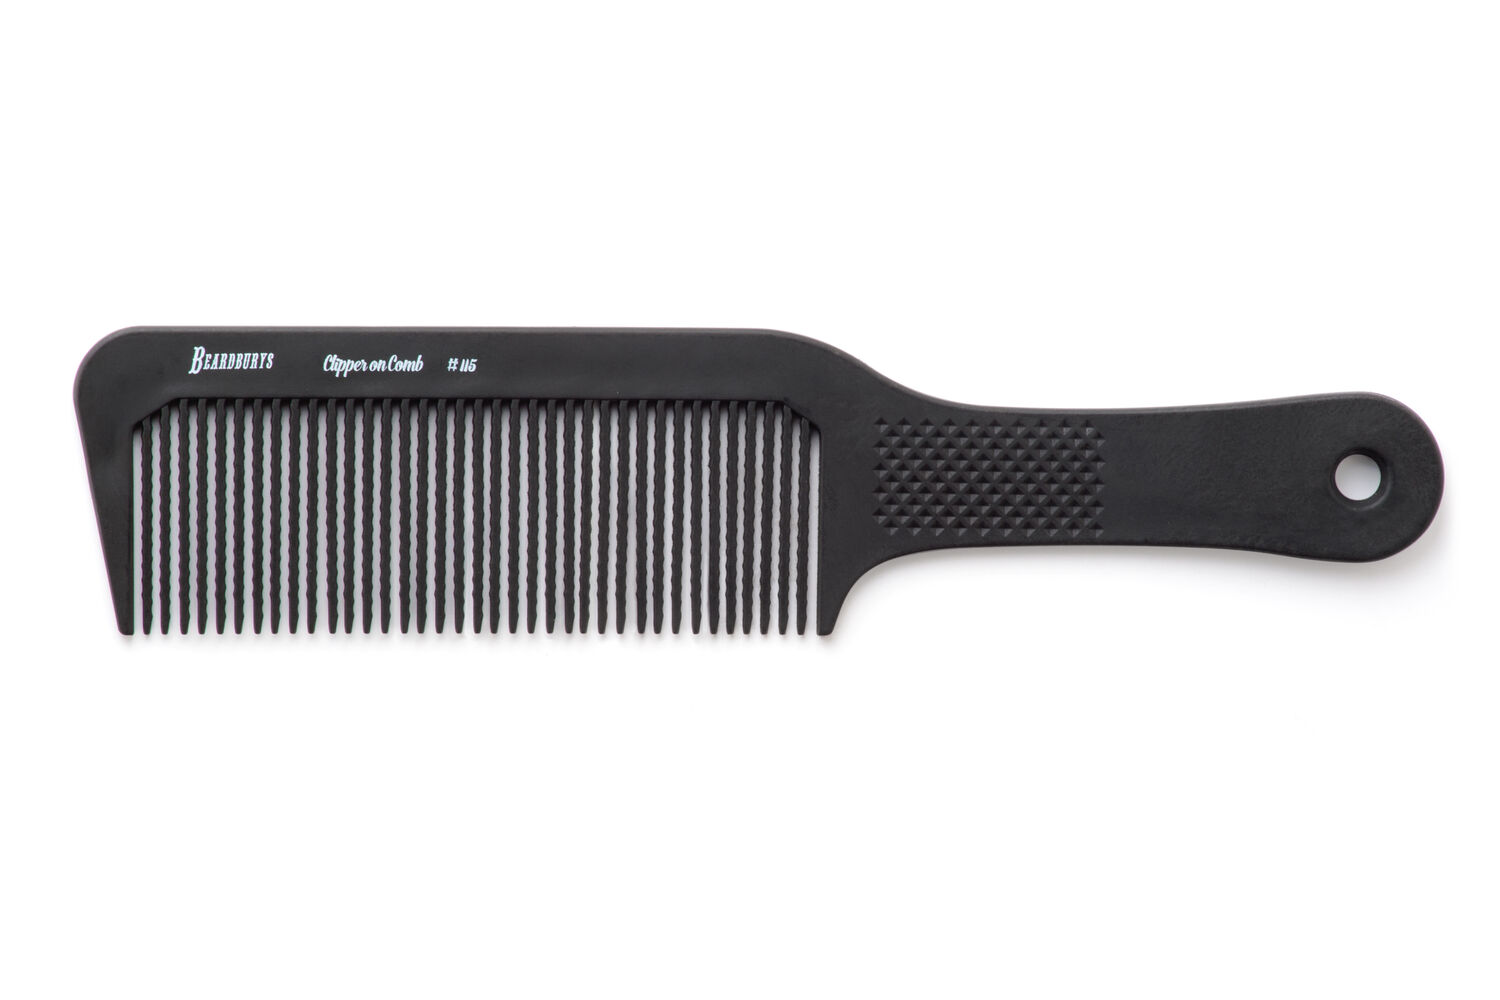 Beardburys Barber’s comb Clipper overComb